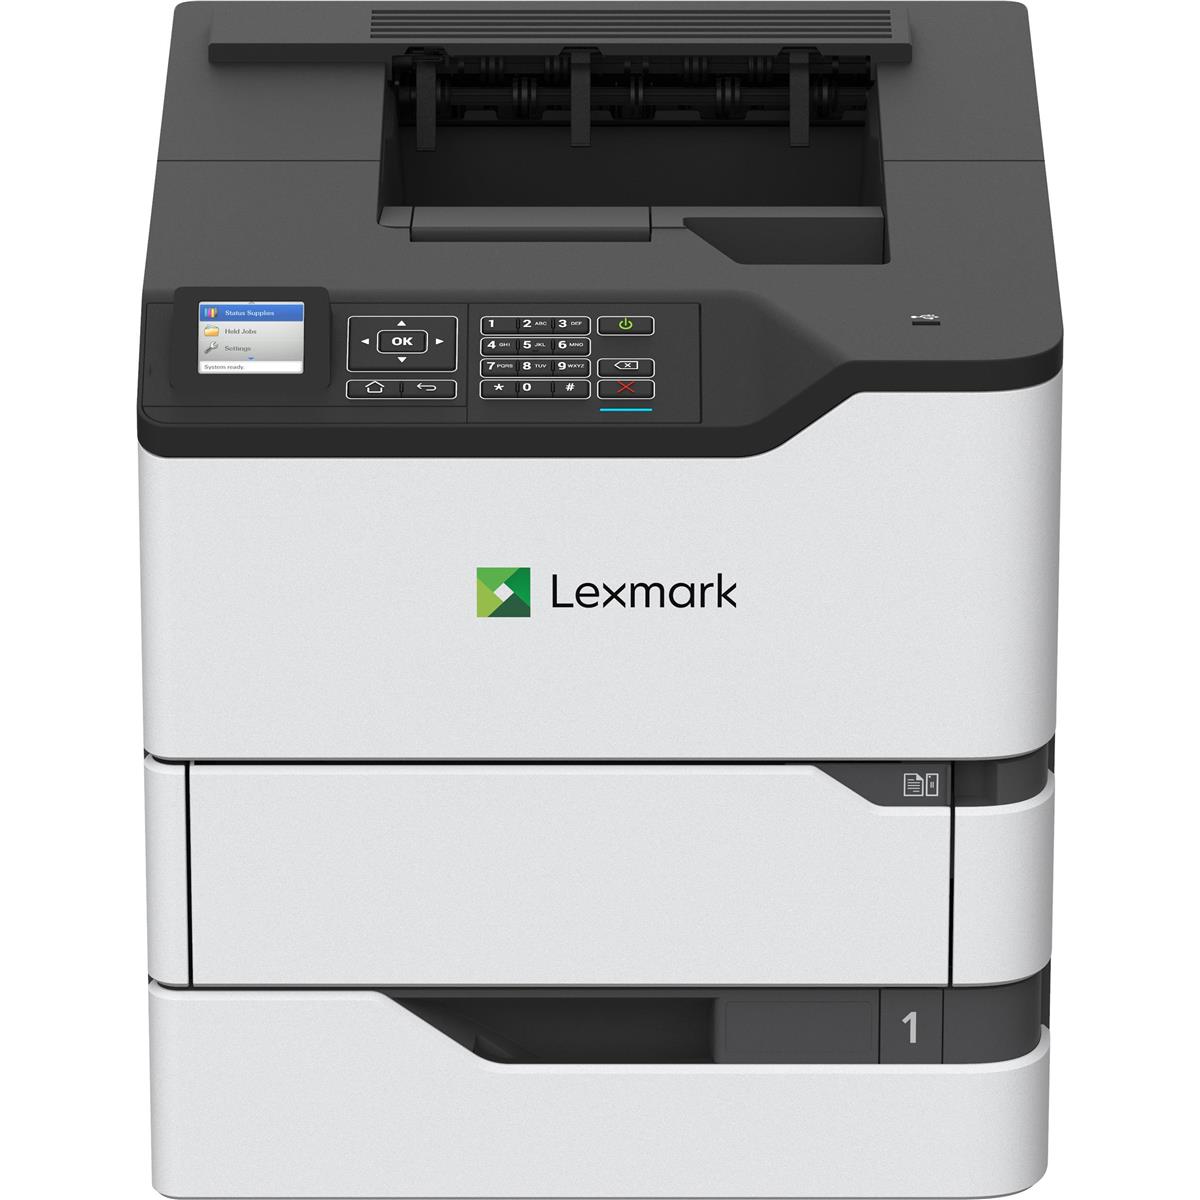 Image of Lexmark MS823dn Monochrome Laser Printer